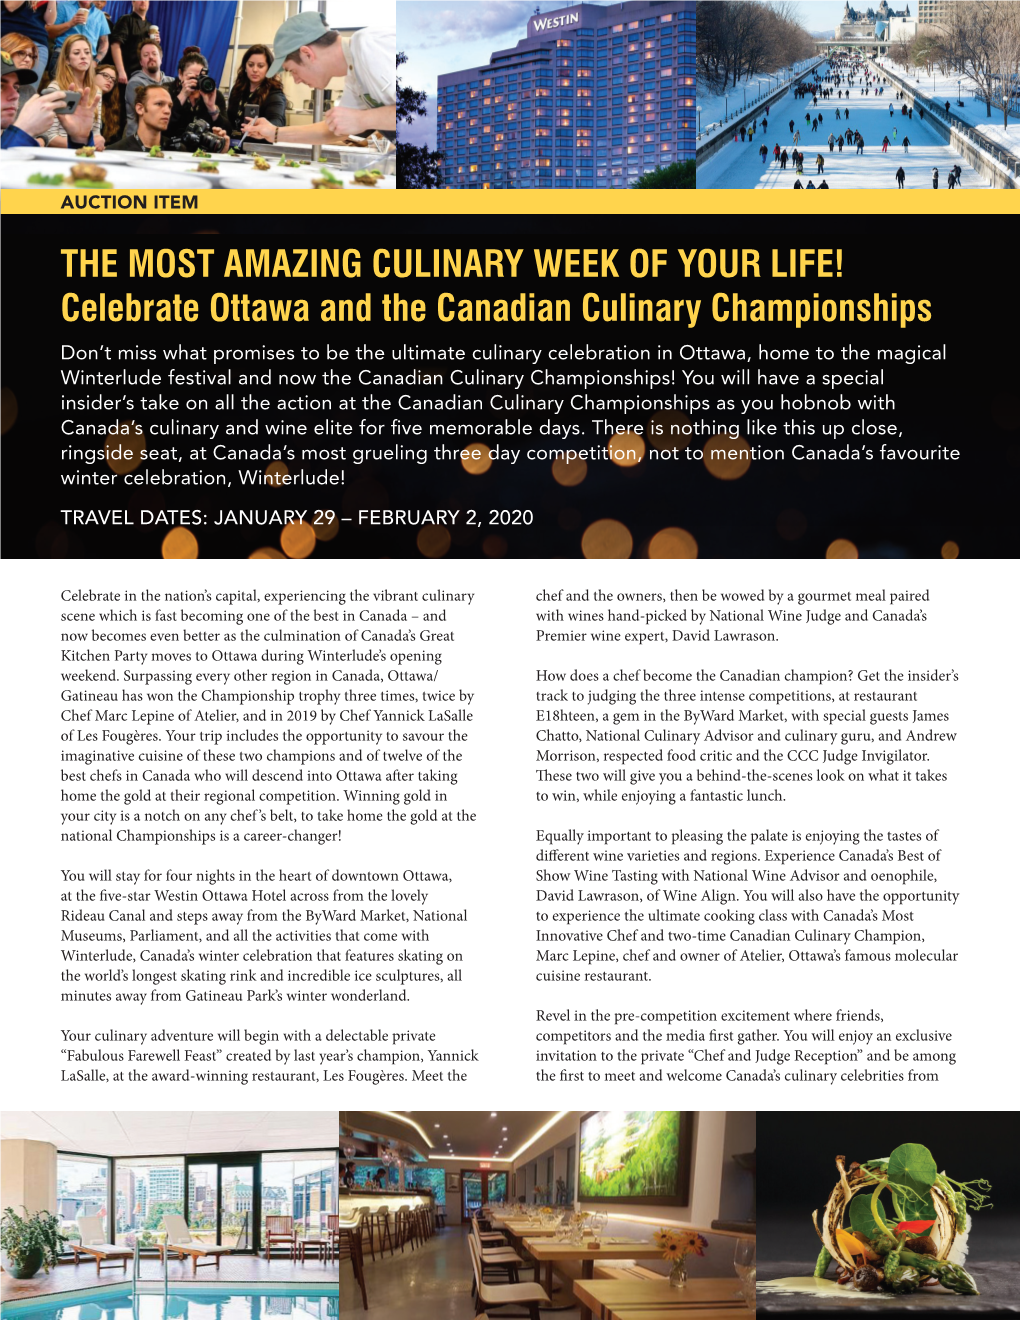 Celebrate Ottawa and the Canadian Culinary Championships